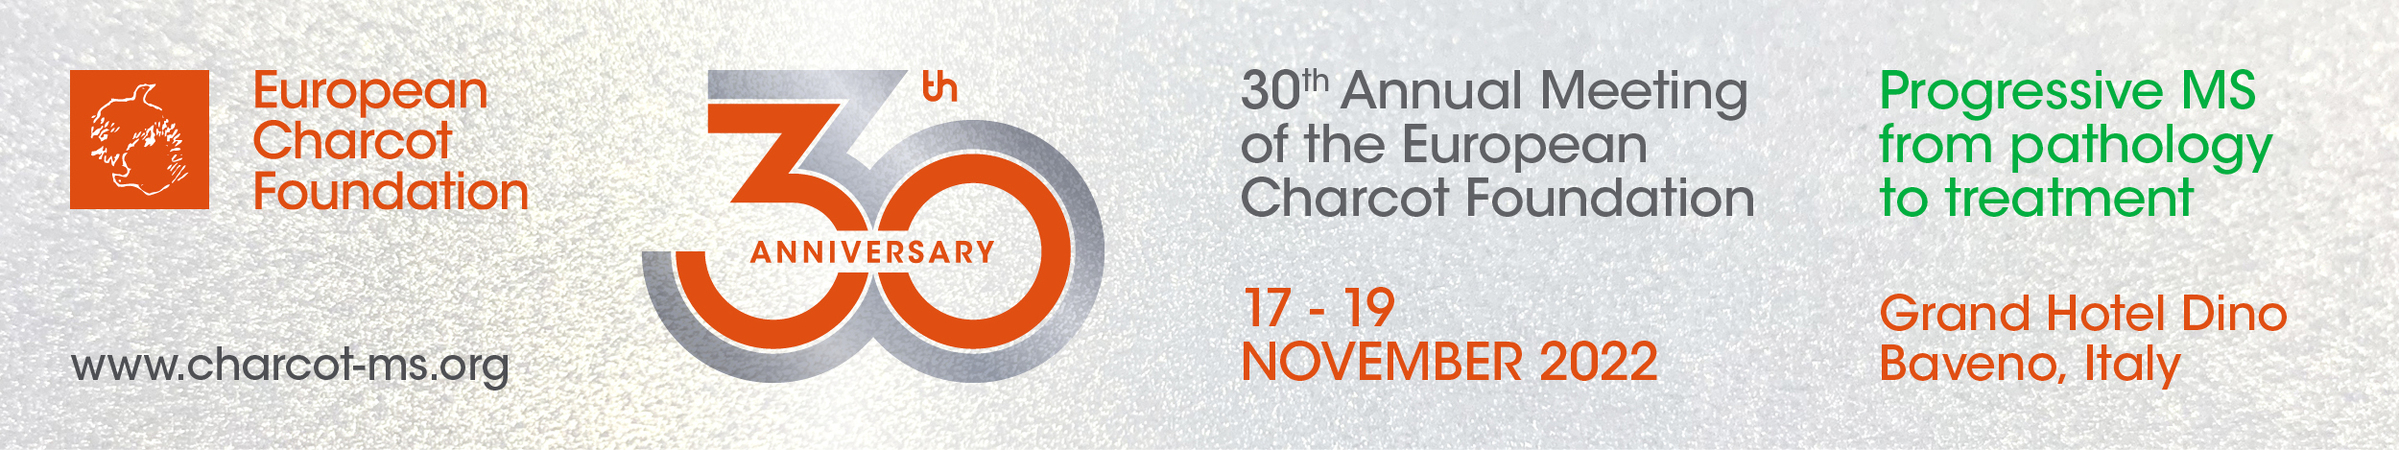 30th Annual Meeting of the European Charcot Foundation, 17 - 19 November 2022, Baveno